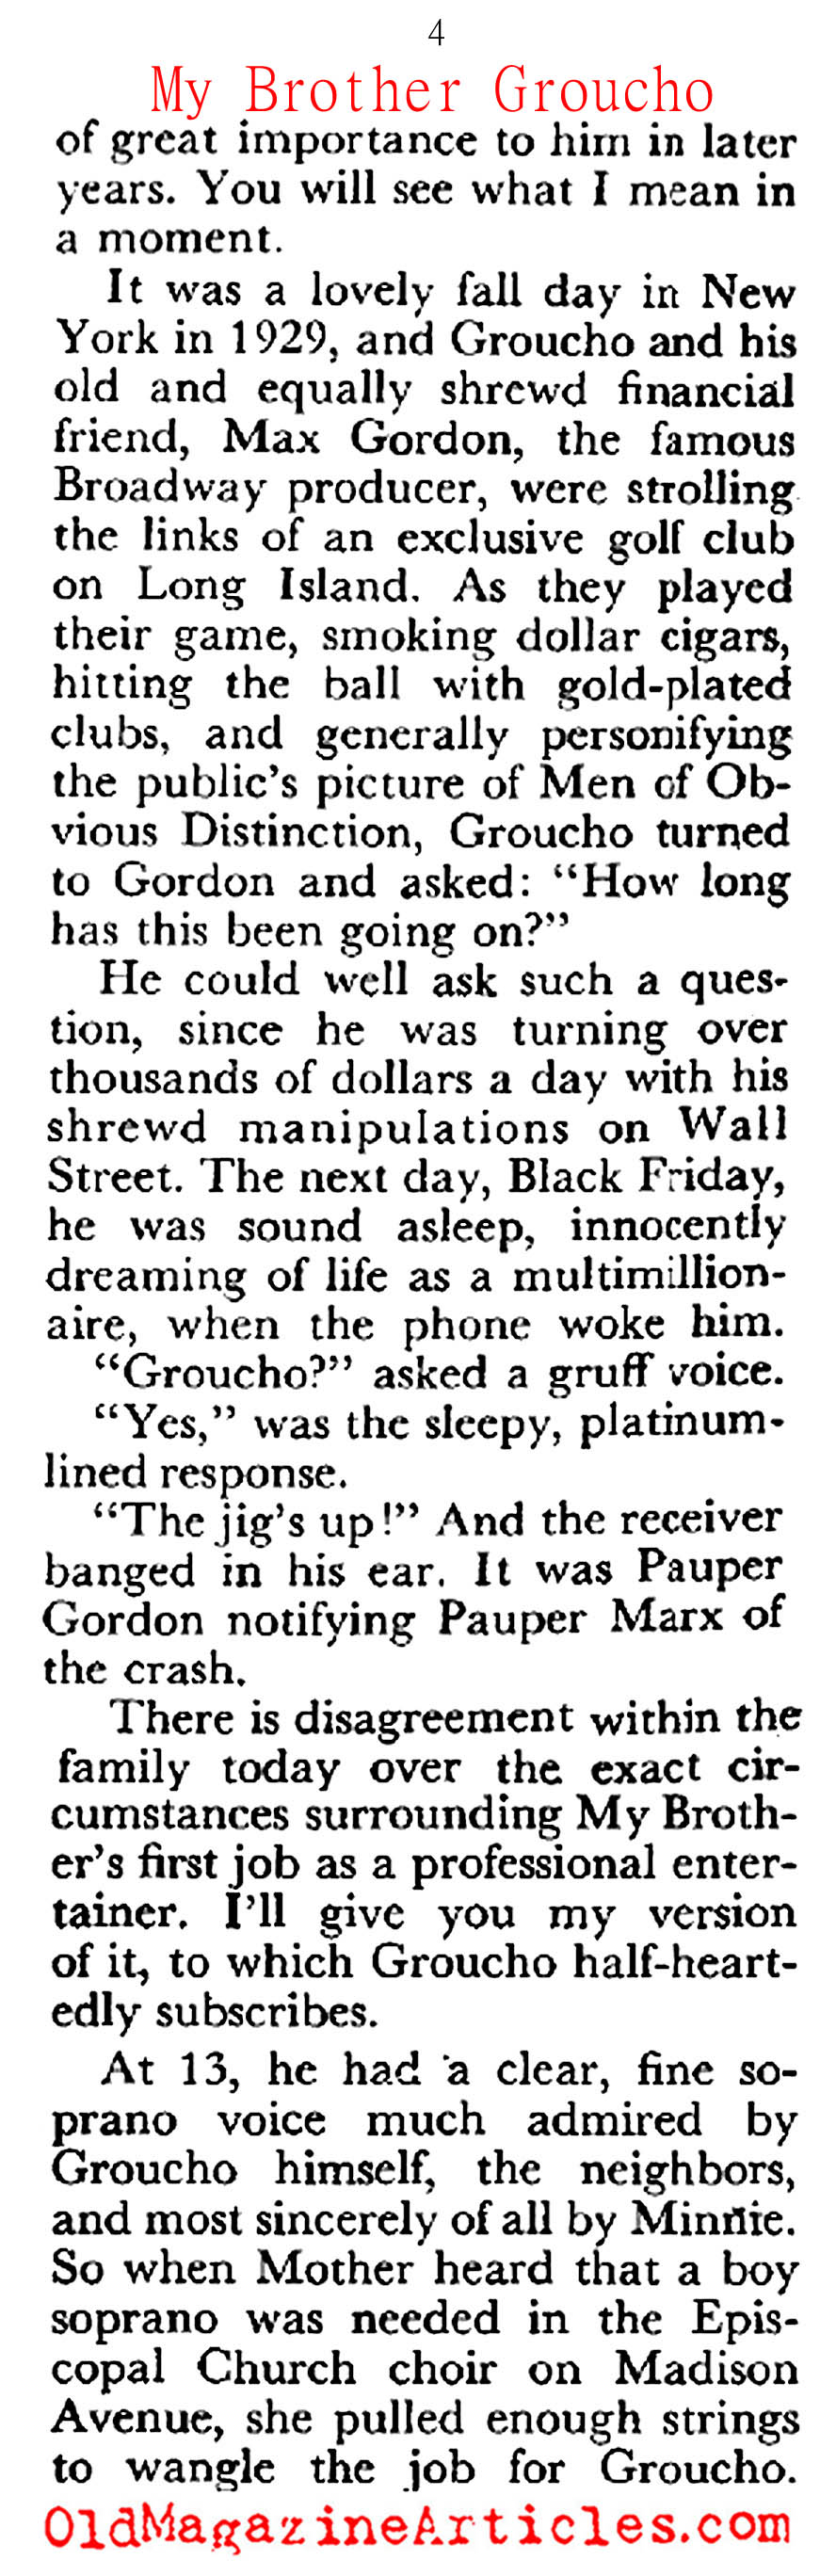 My Brother Groucho (Coronet Magazine, 1951)